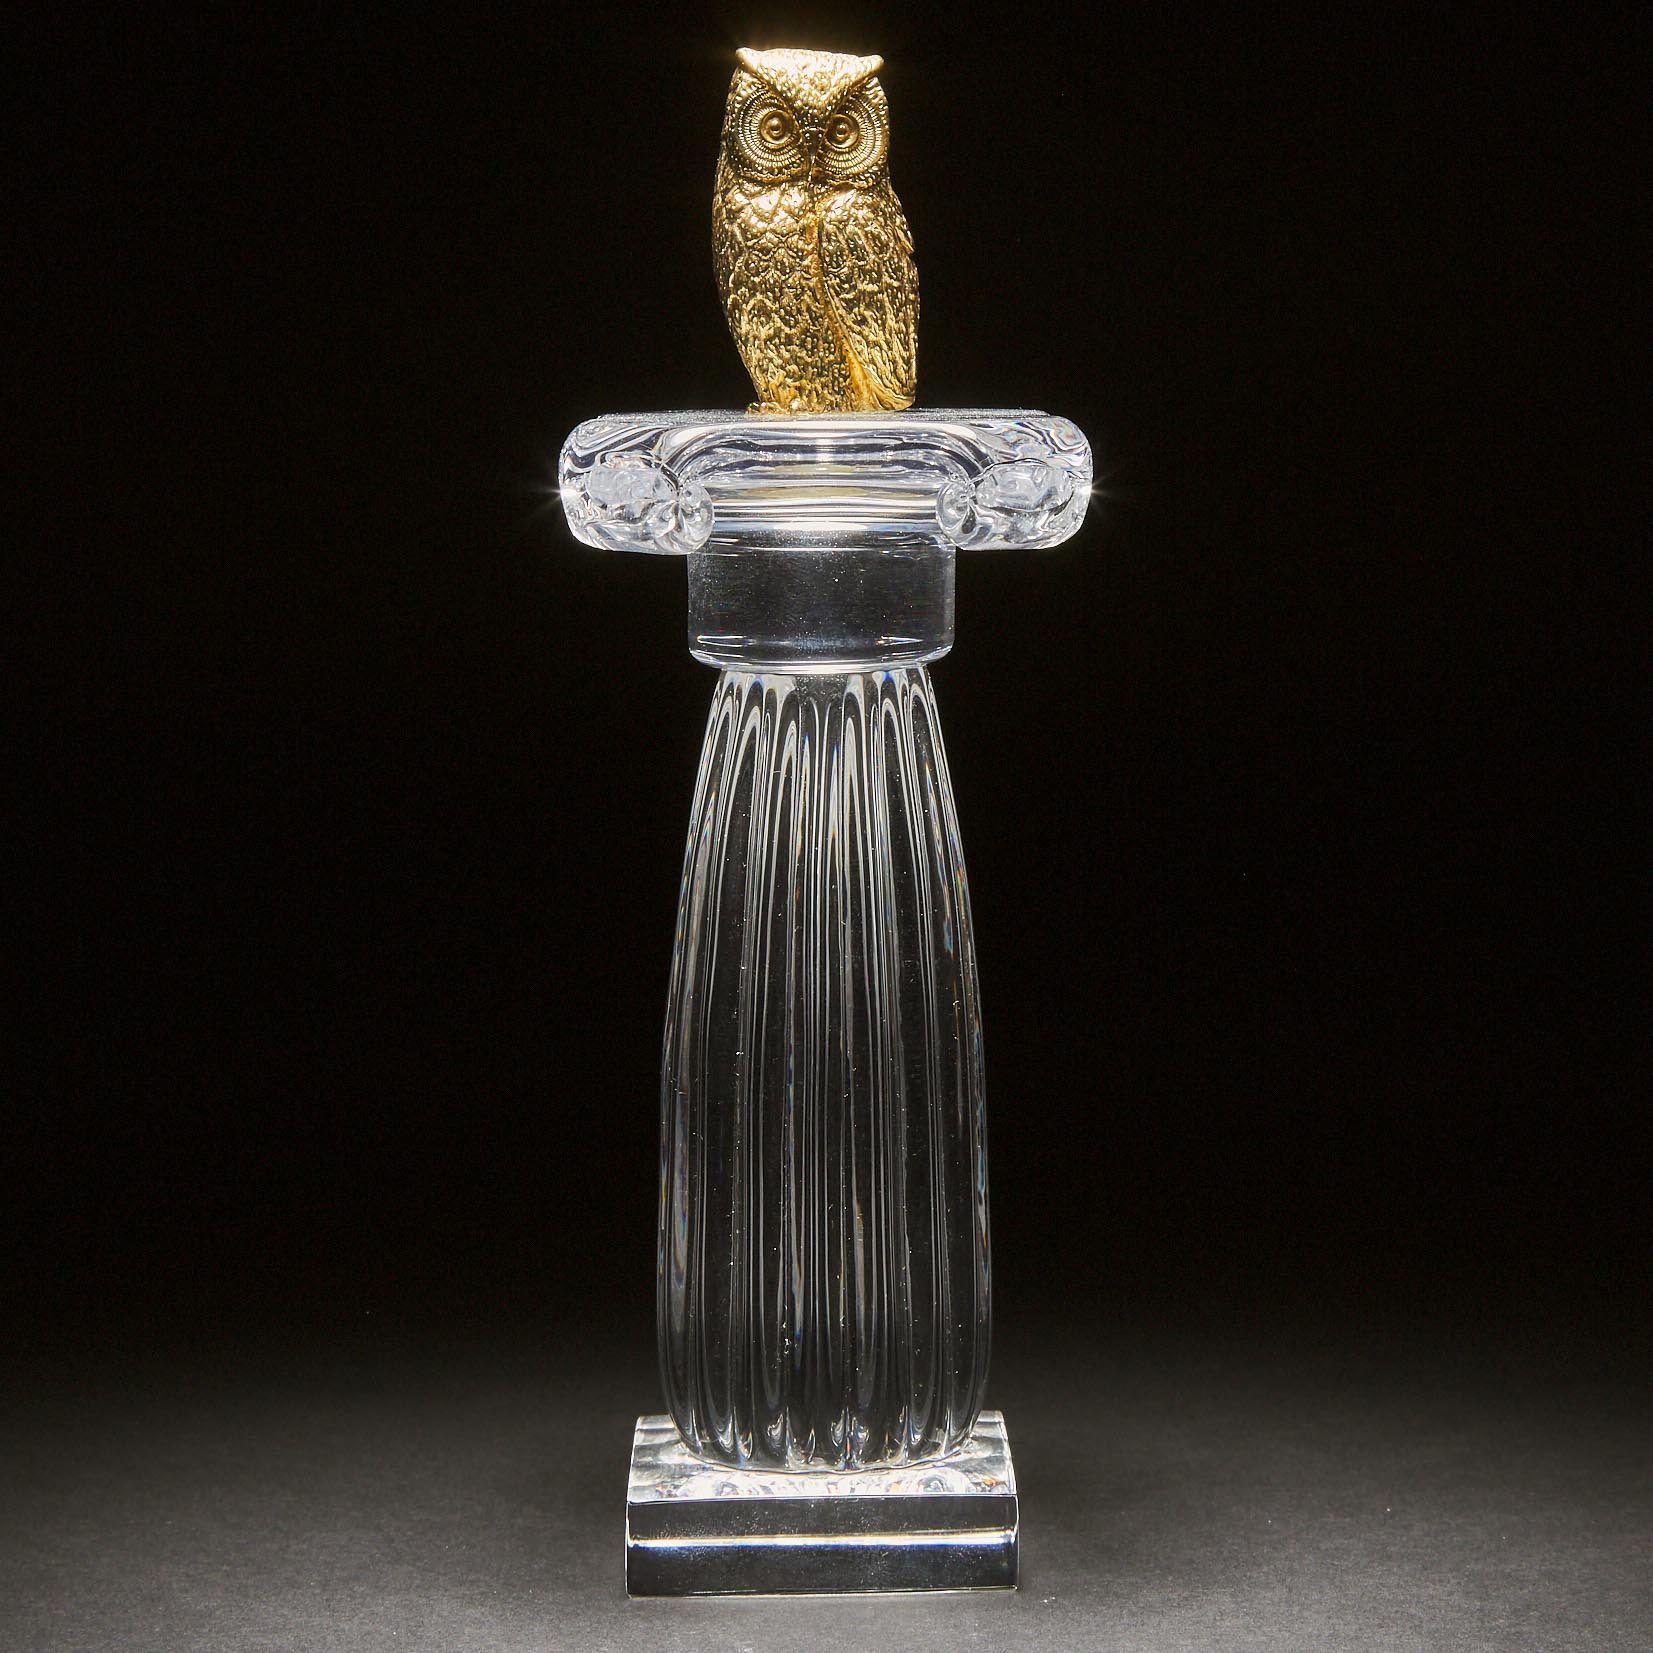 Steuben Glass and Yellow Gold 'Column of the Owl', James Houston, c.1974